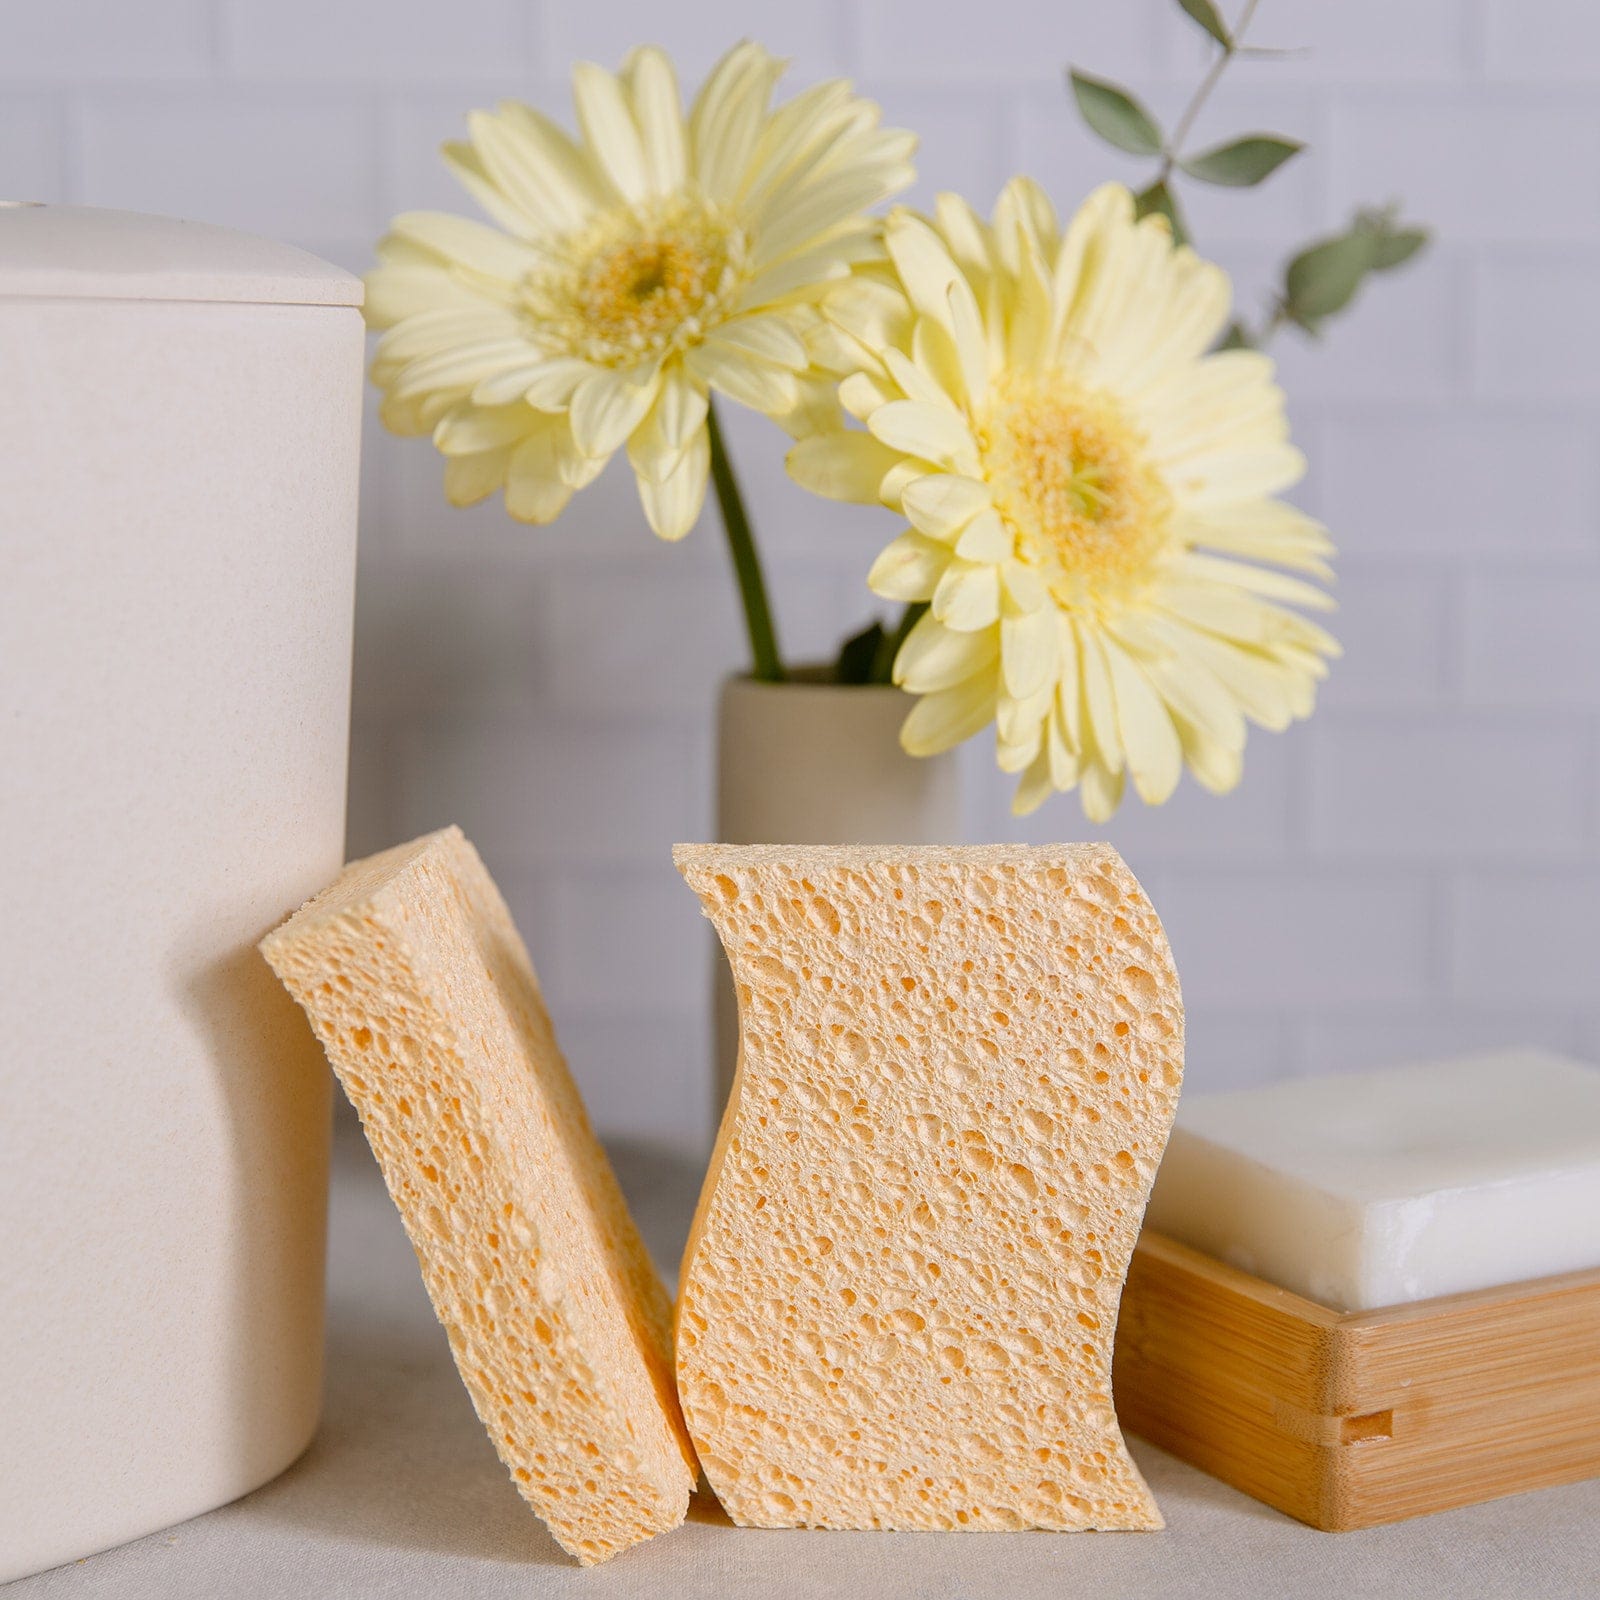 Biodegradable Kitchen Sponges - Zero Waste Sponges, 100% Wood Pulp